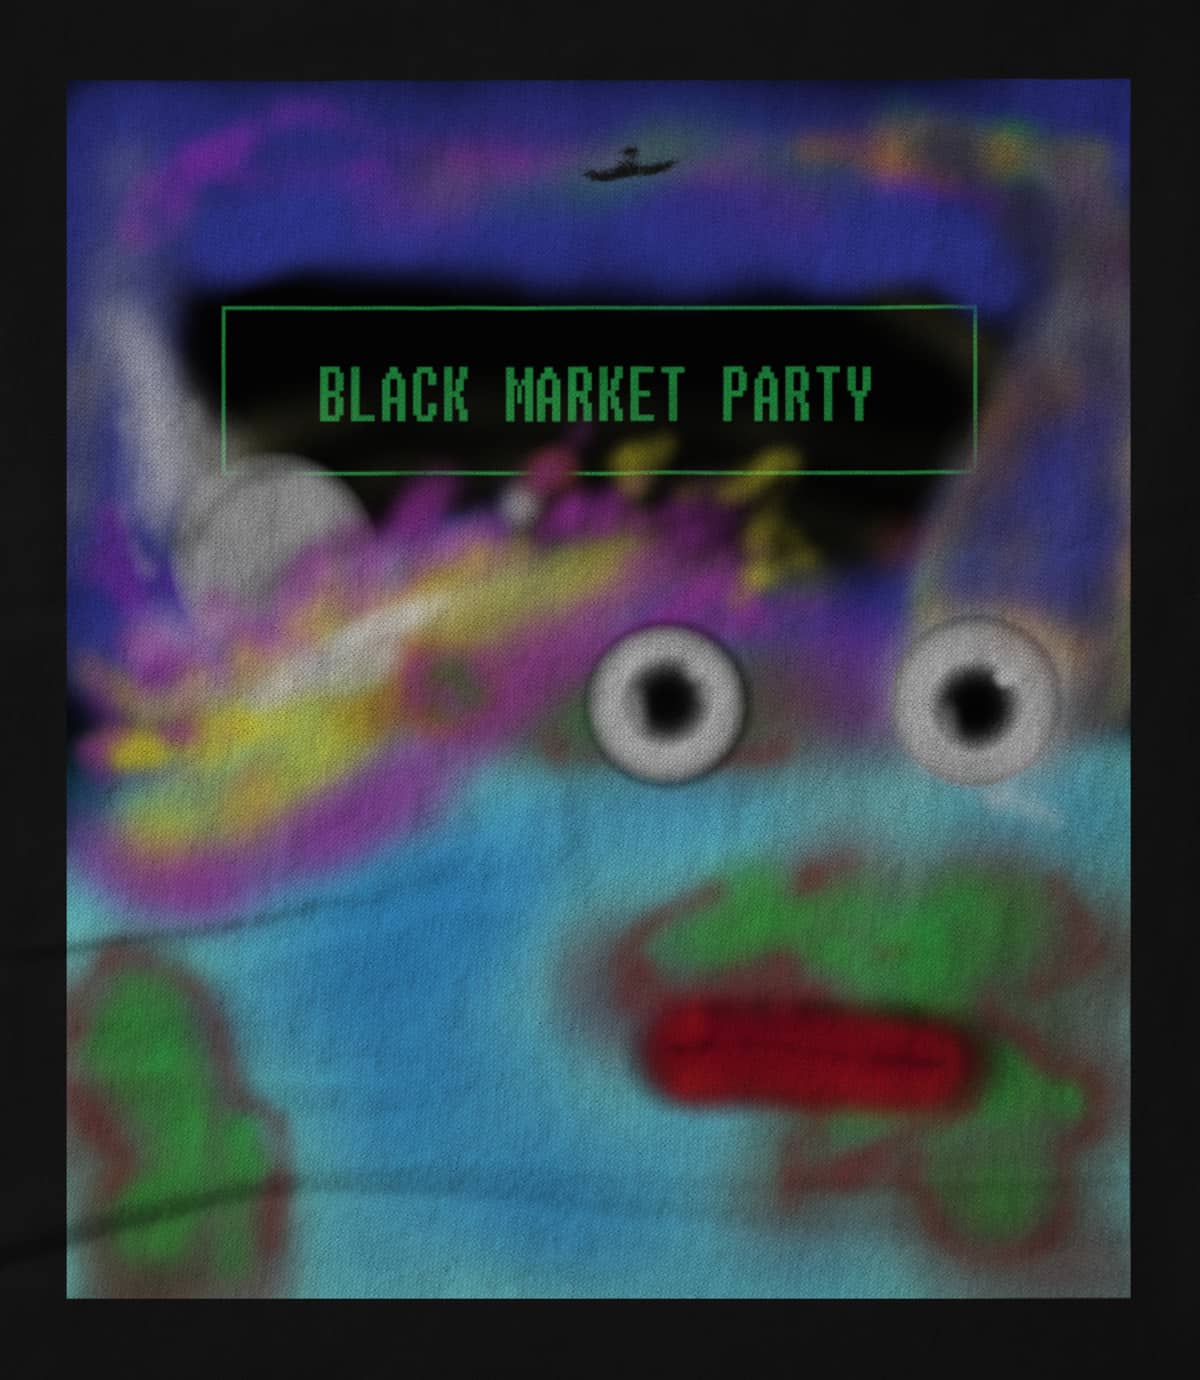 Black market party